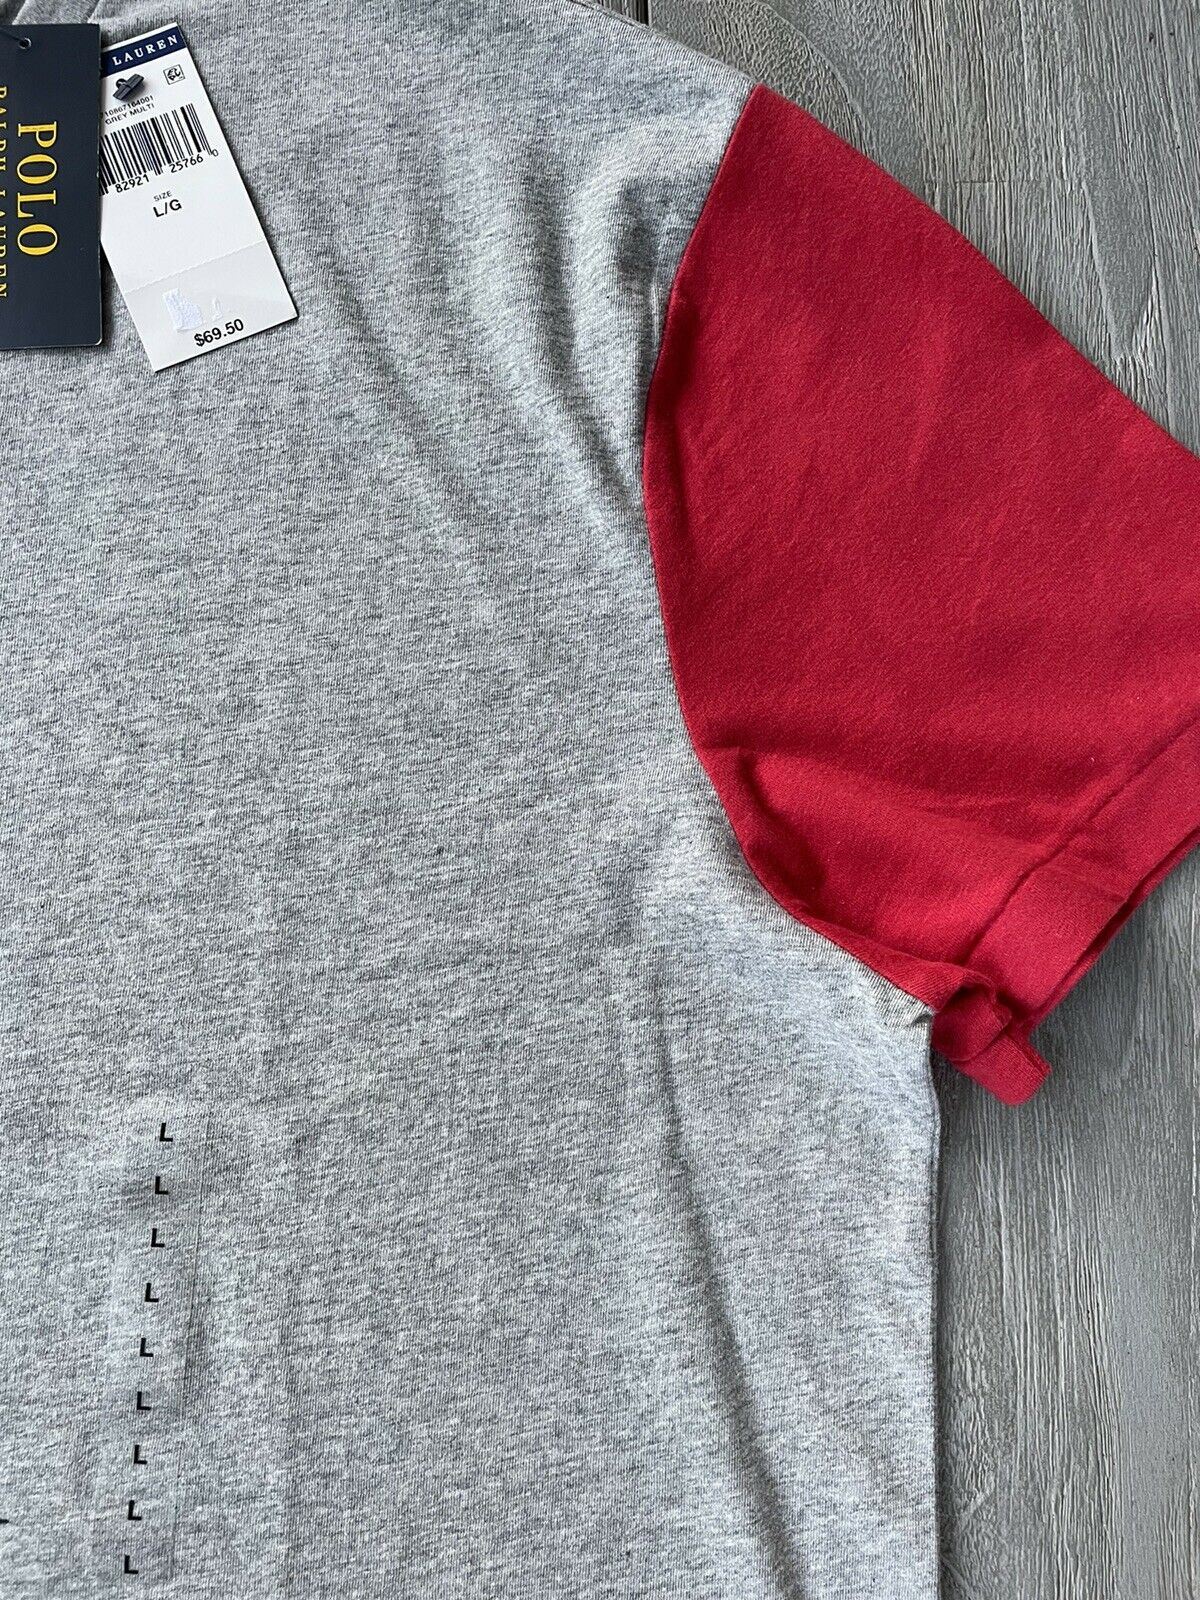 NWT Polo Ralph Lauren Men's Preppy Bear Classic Fit Tri-color T-Shirt Gray XL